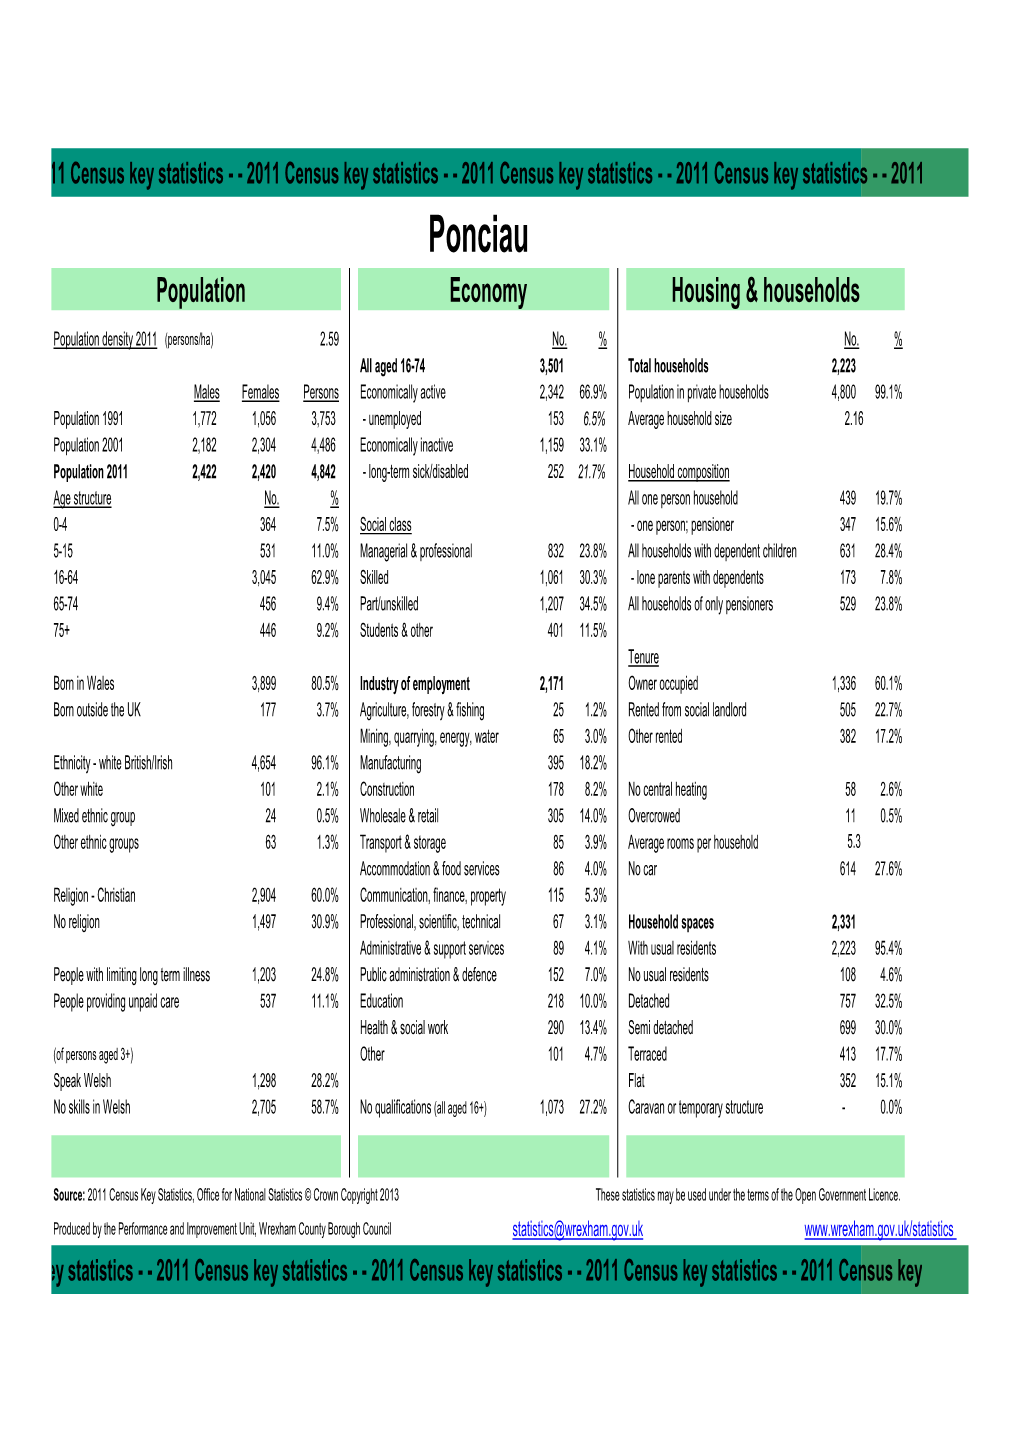 Ponciau Population Economy Housing & Households